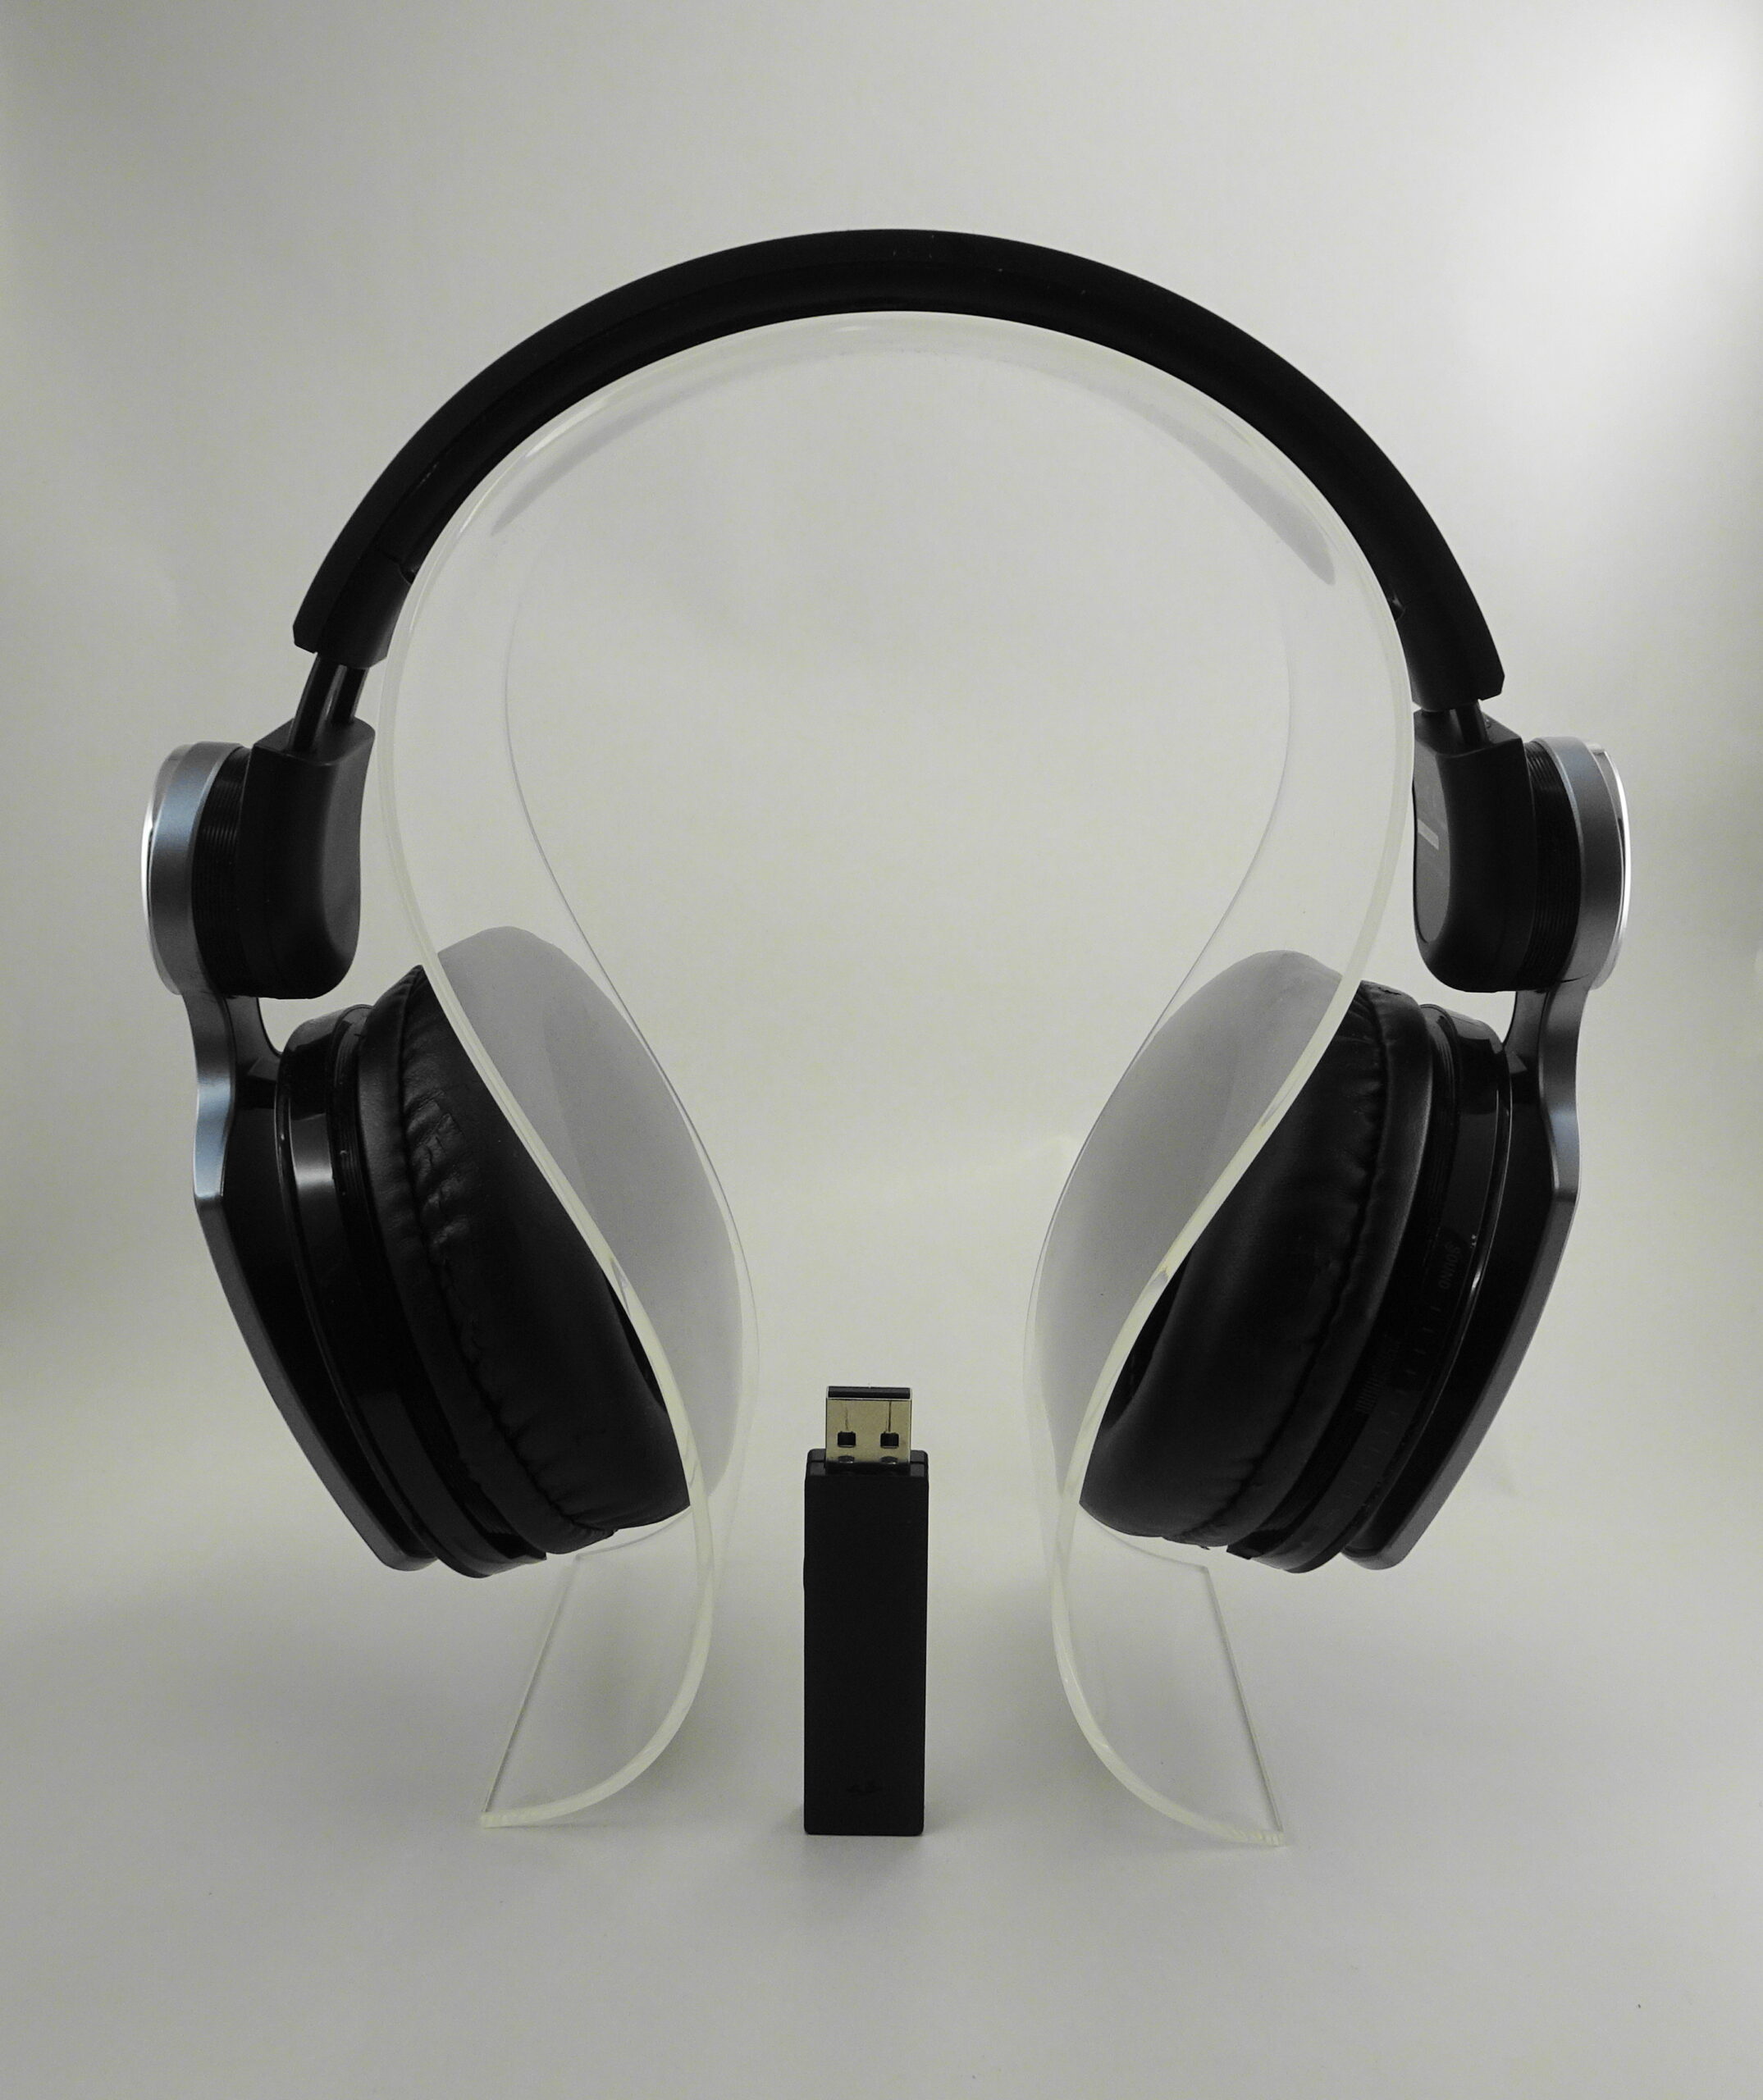 Original Sony Pulse Wireless Stereo Headset Med Kasse (PS3)